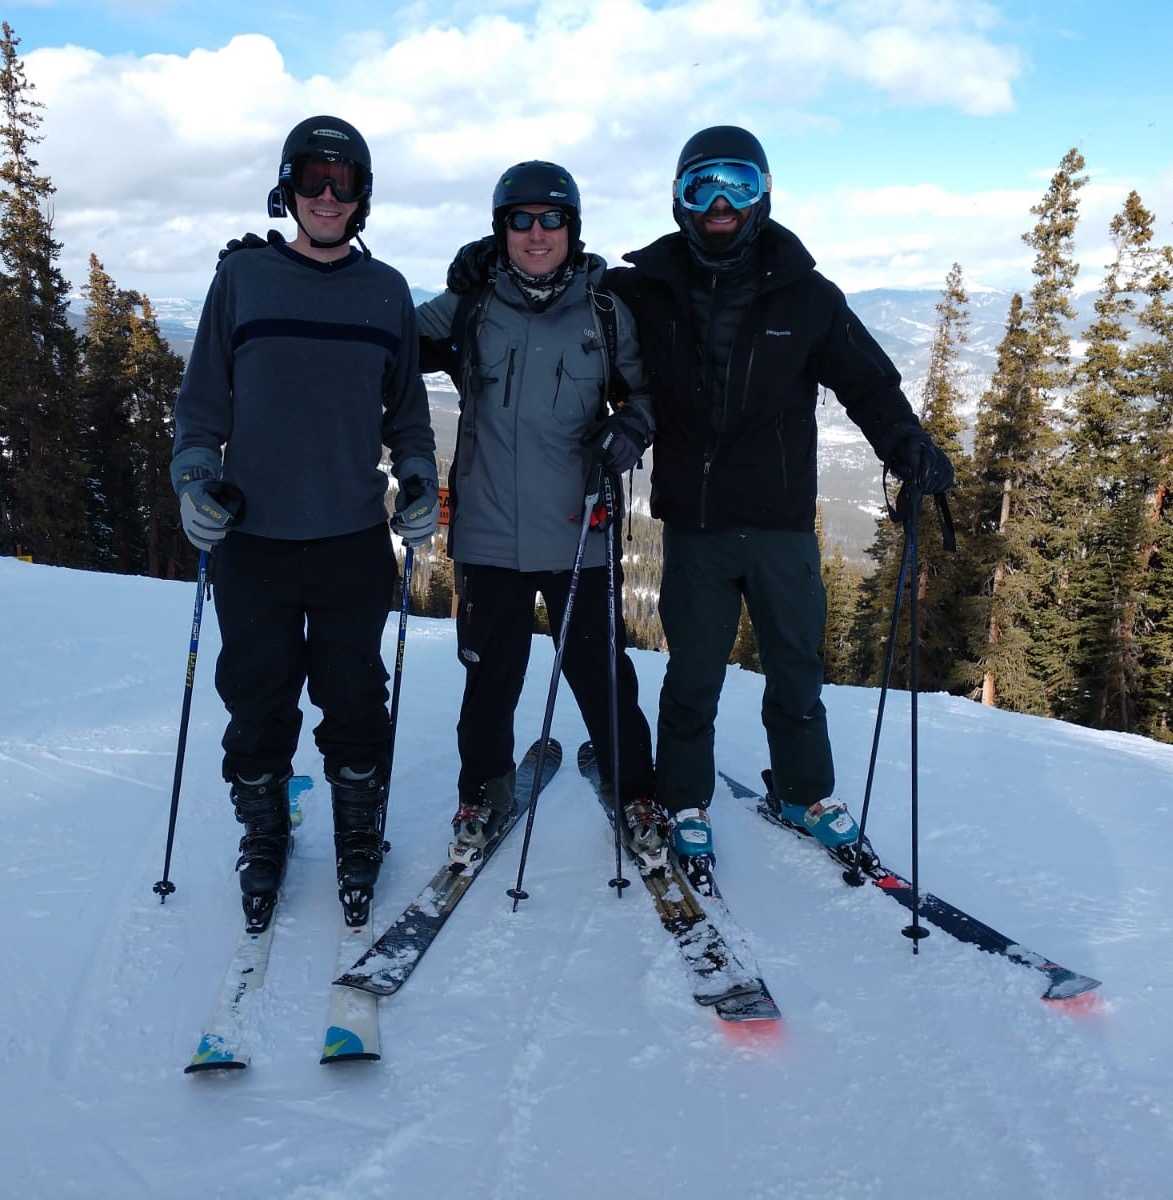 Team ski trip #1